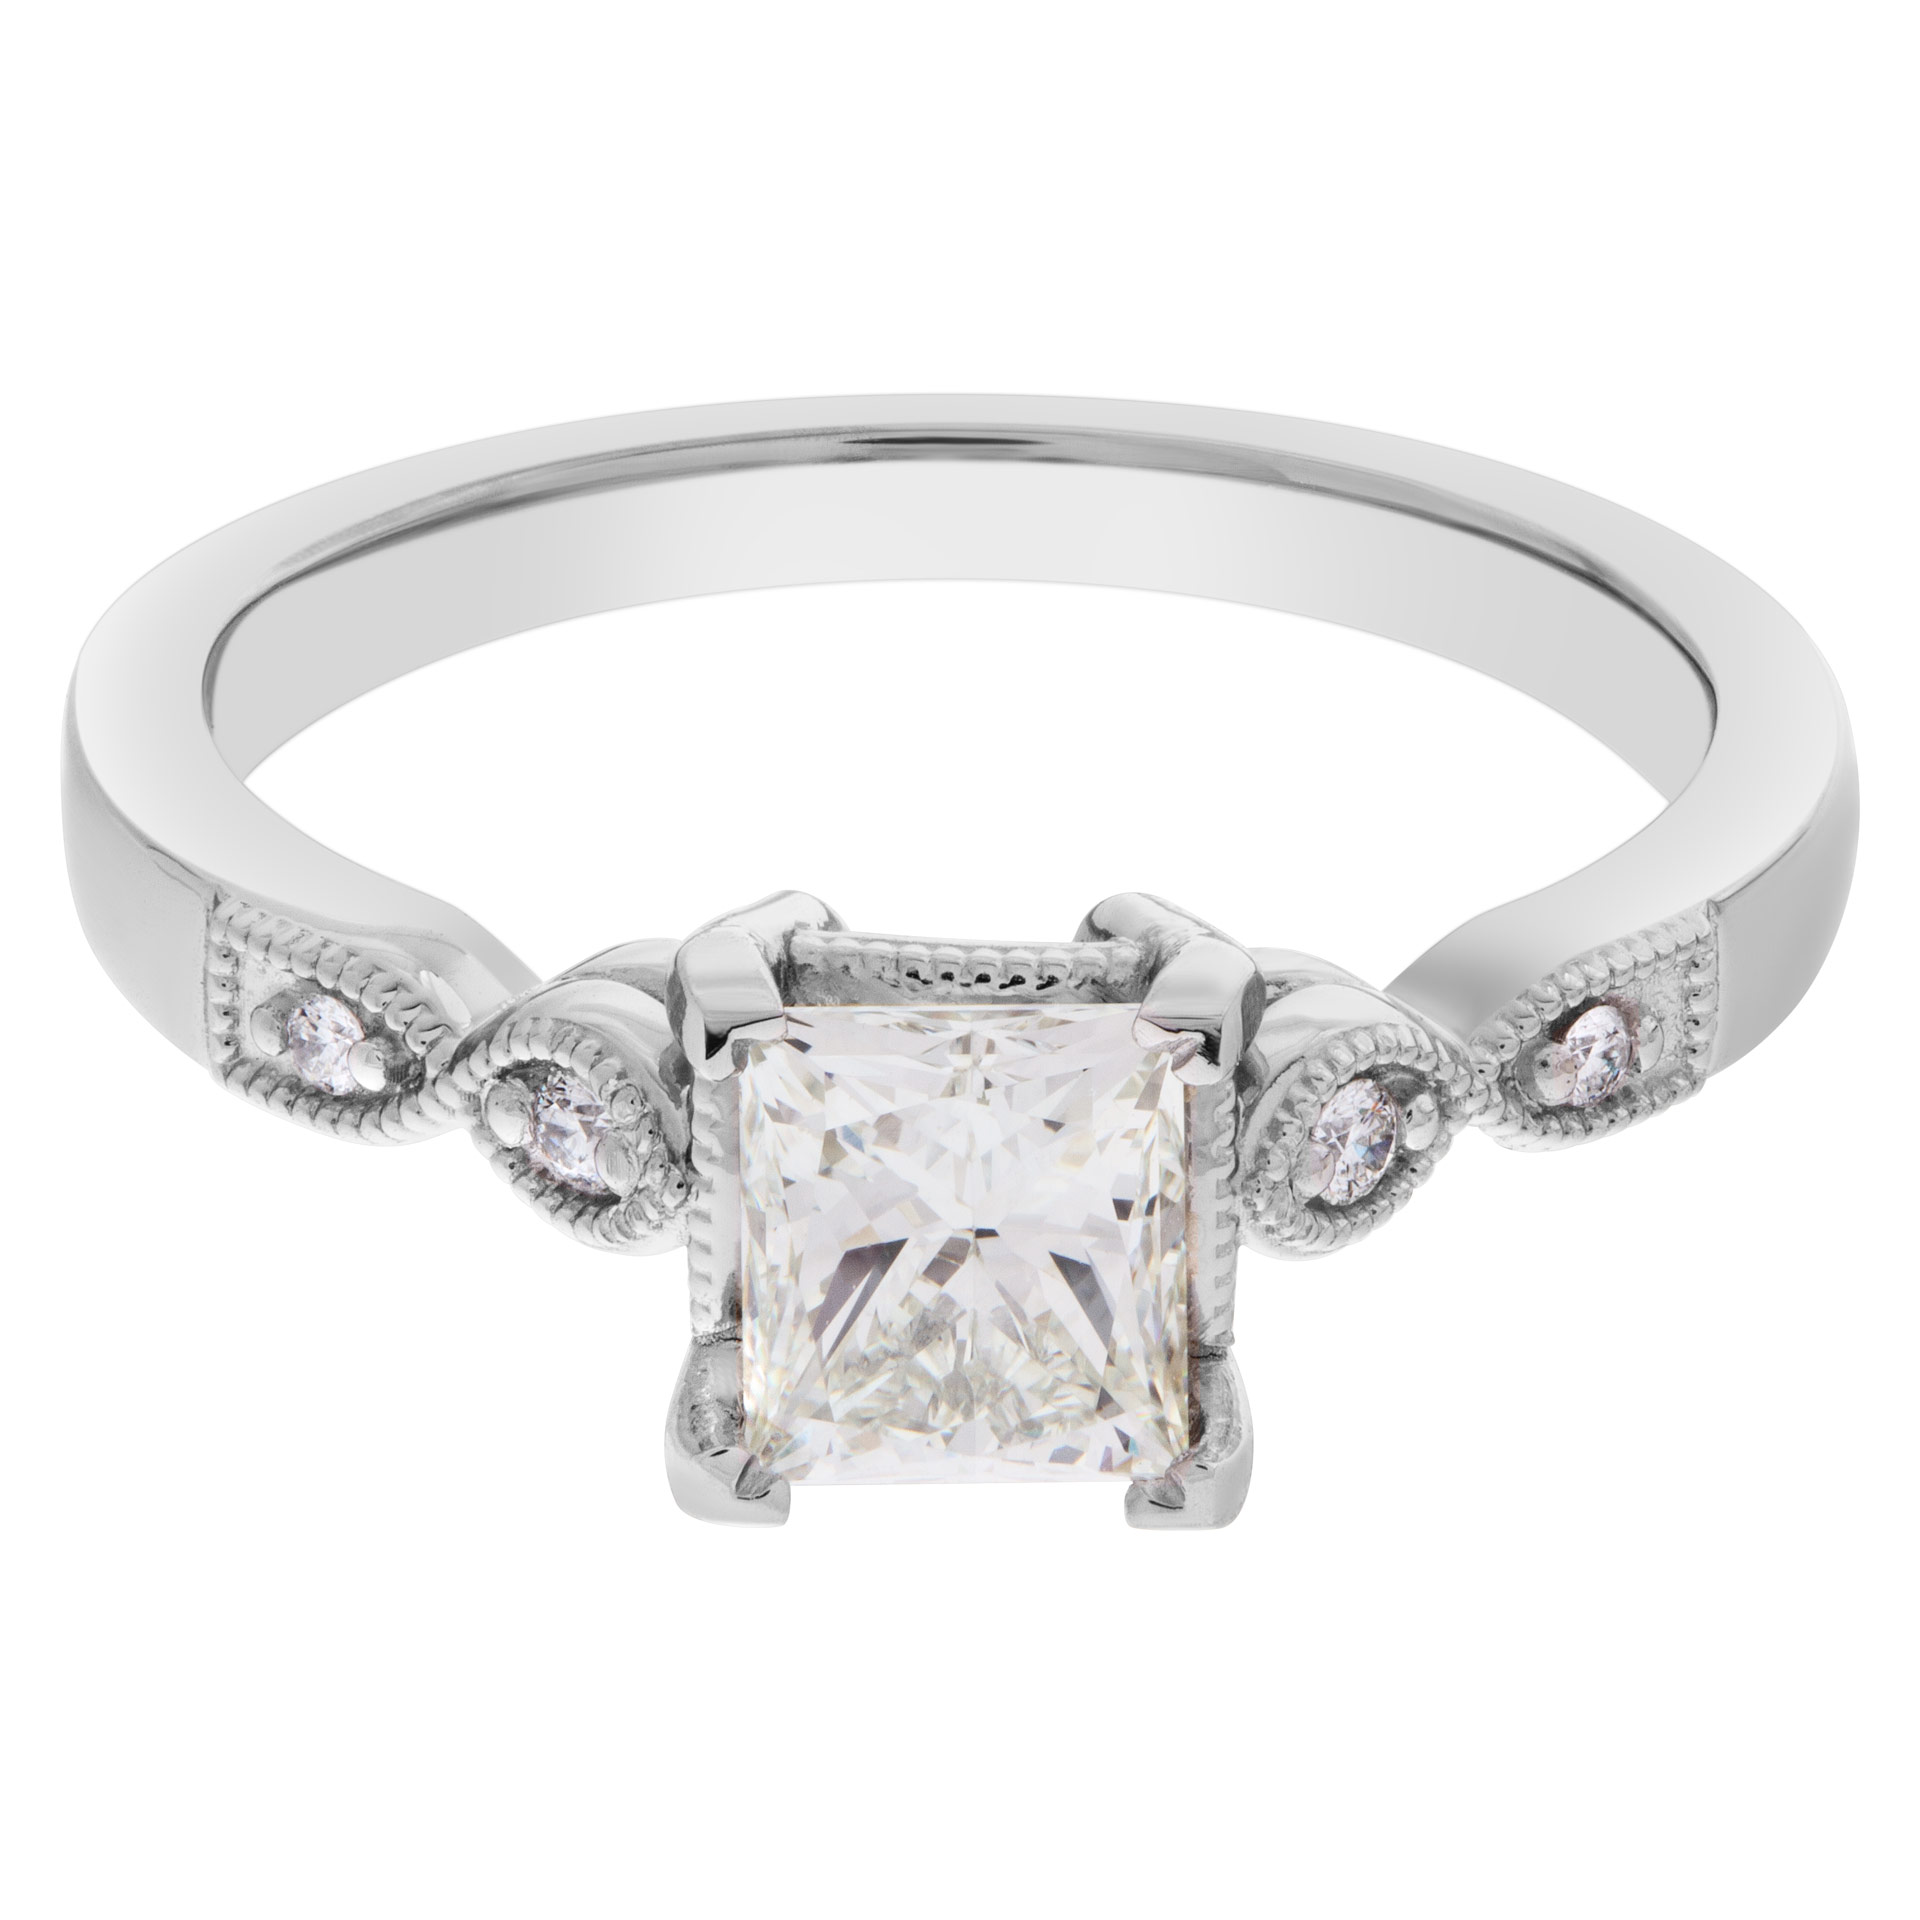 GIA certified rectangular modified brilliant cut diamond 1.03 carat (L color, VVS2 clarity) ring